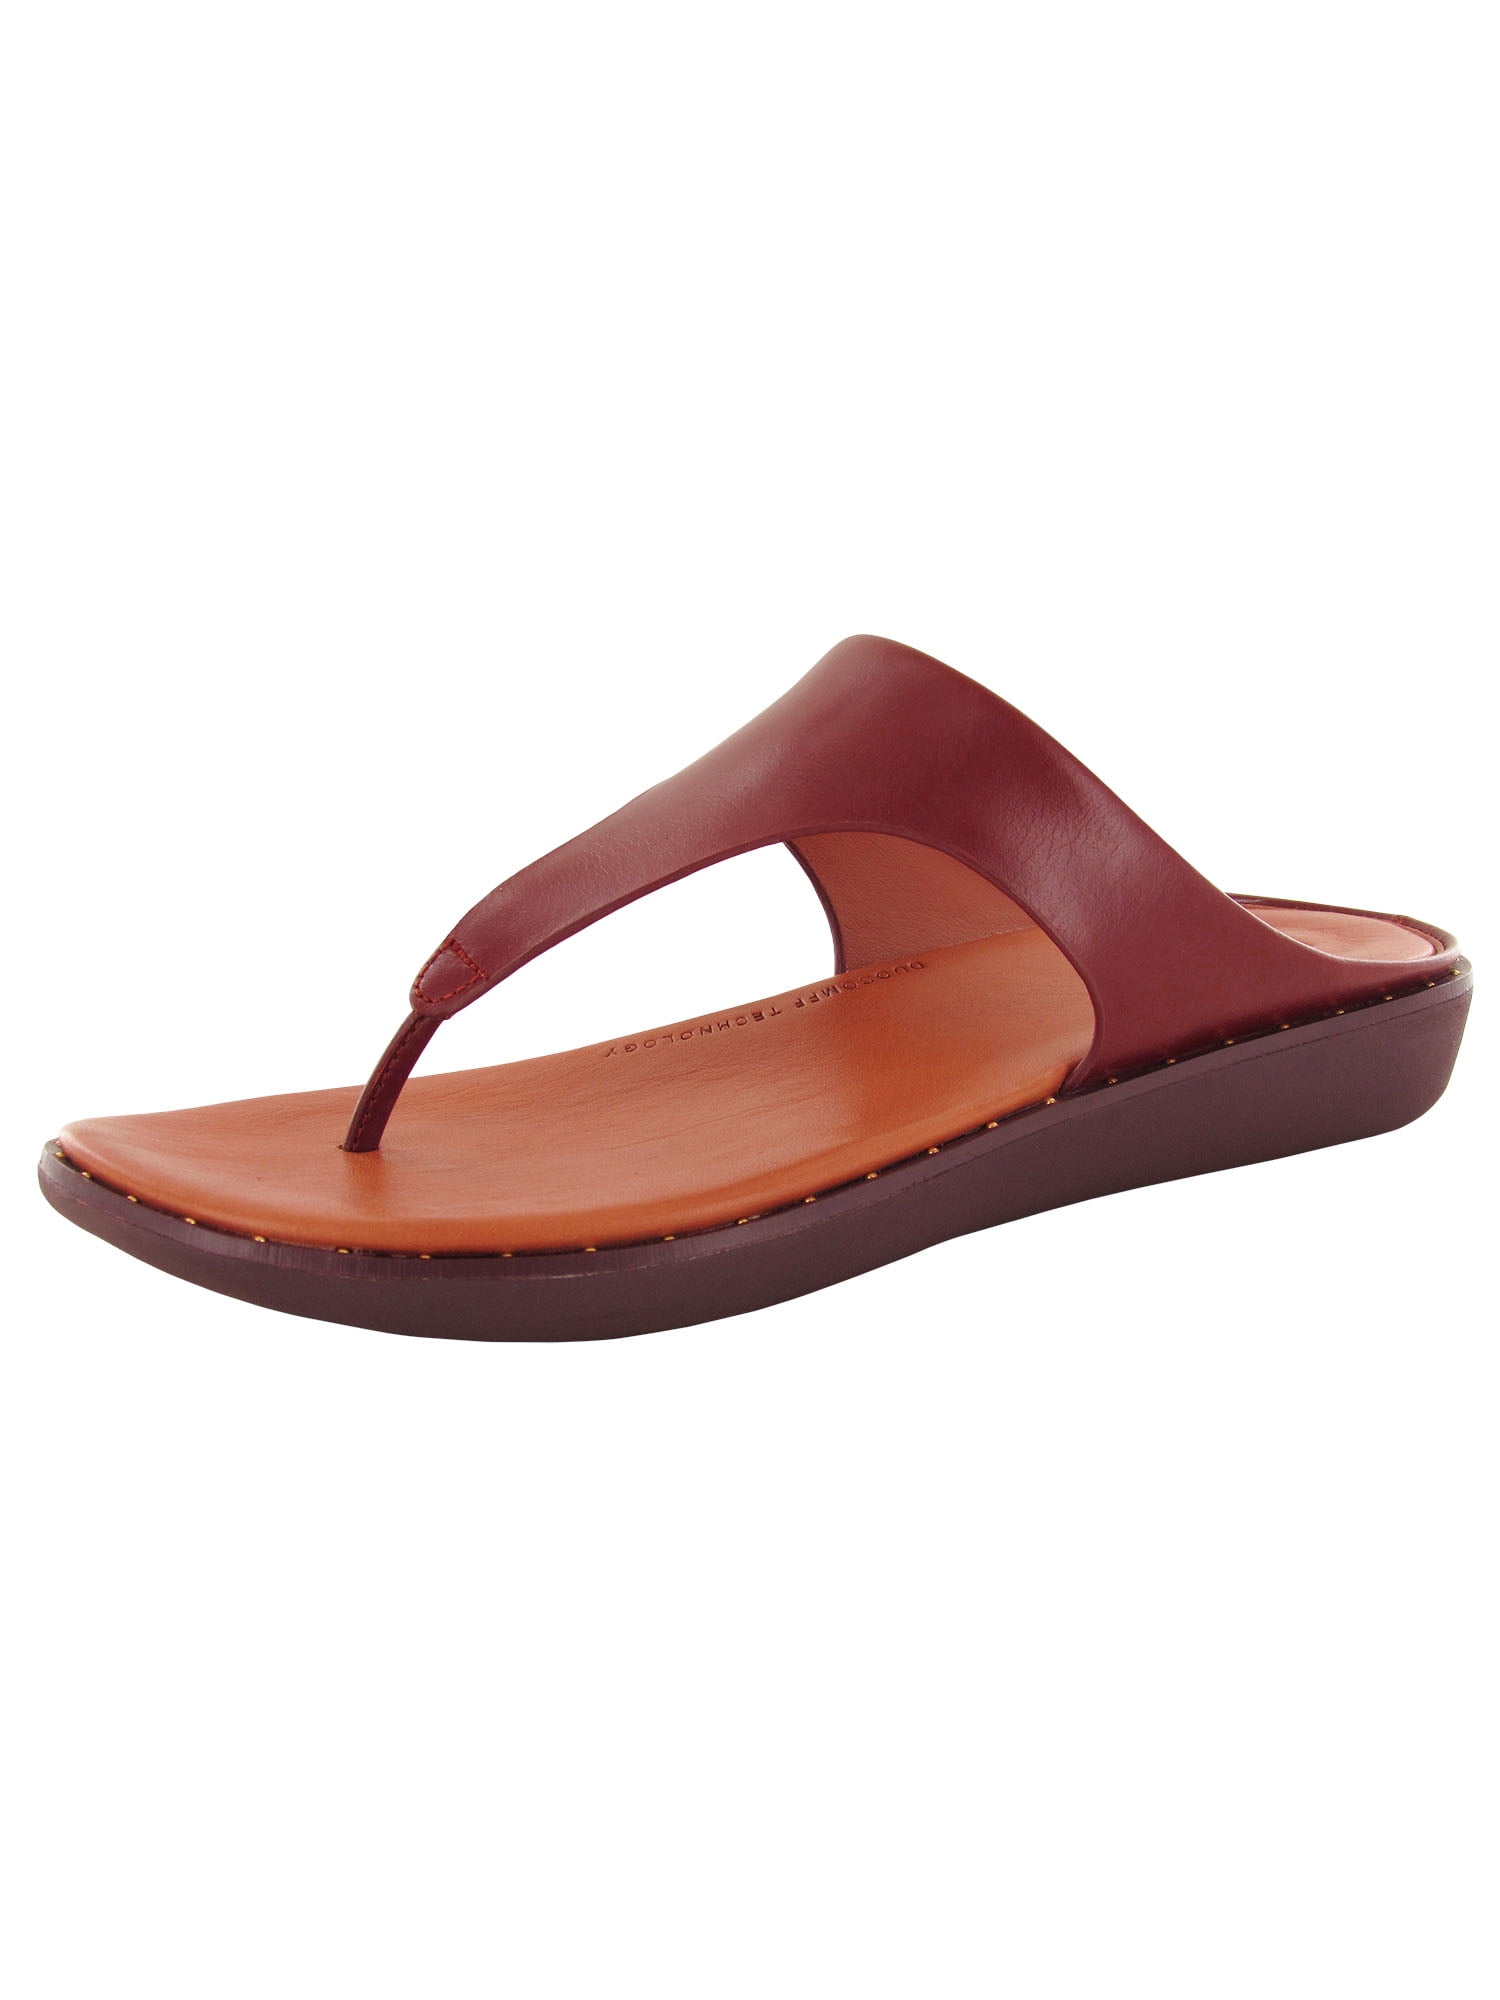 Fitflop Womens Banda Glitz Toe Thong Sandal Shoes, Berry, US 9